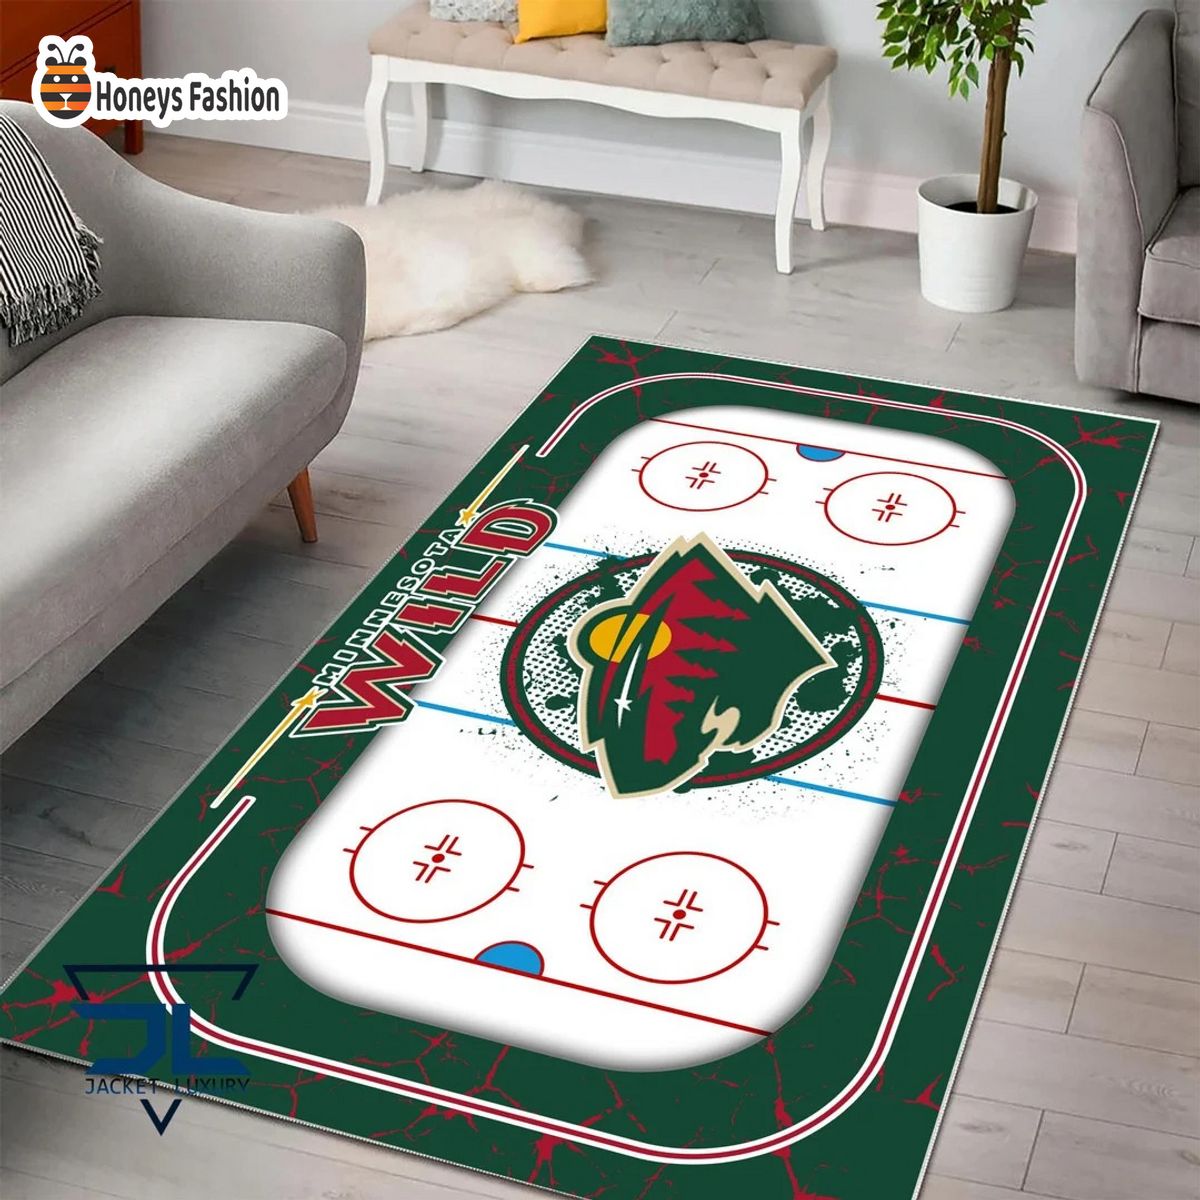 Minnesota Wild NHL Rug Carpet